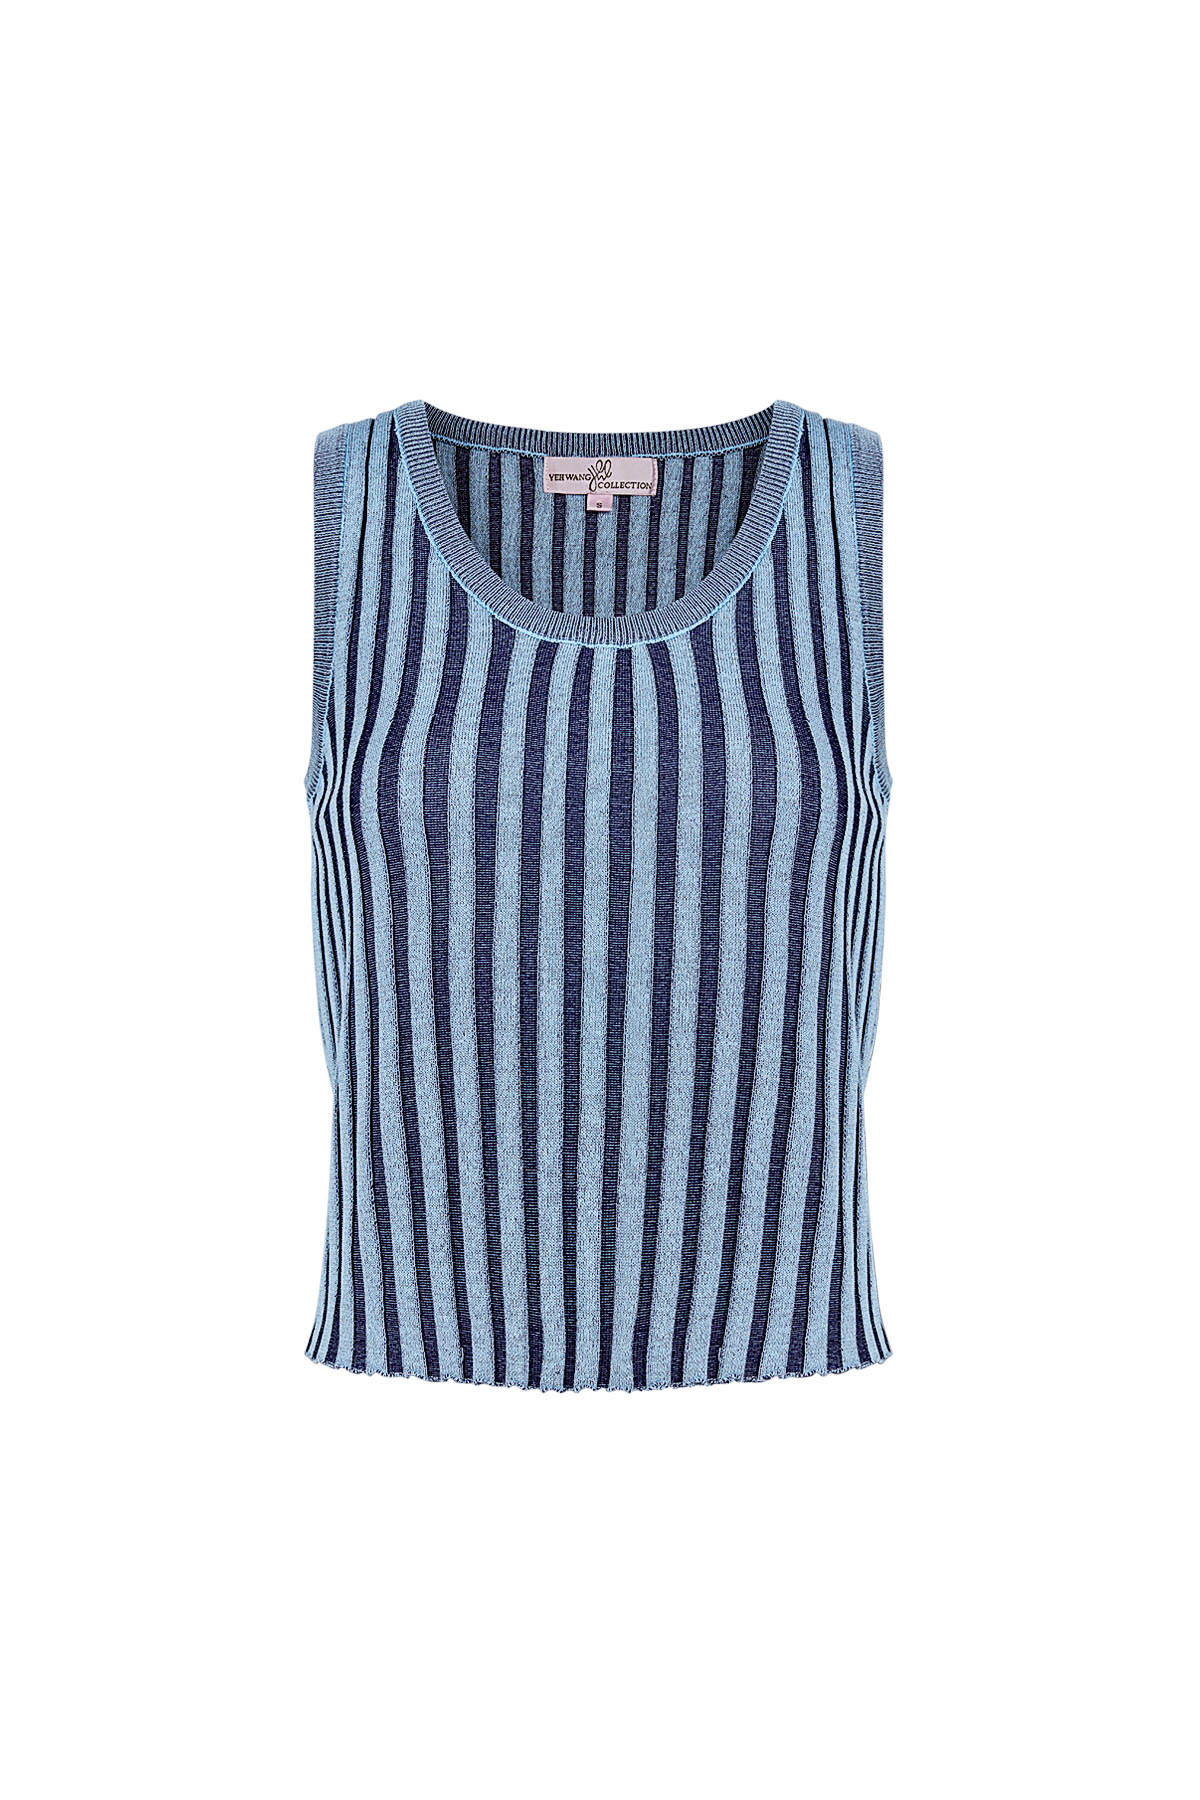 Sleeveless, striped top medium – blue 